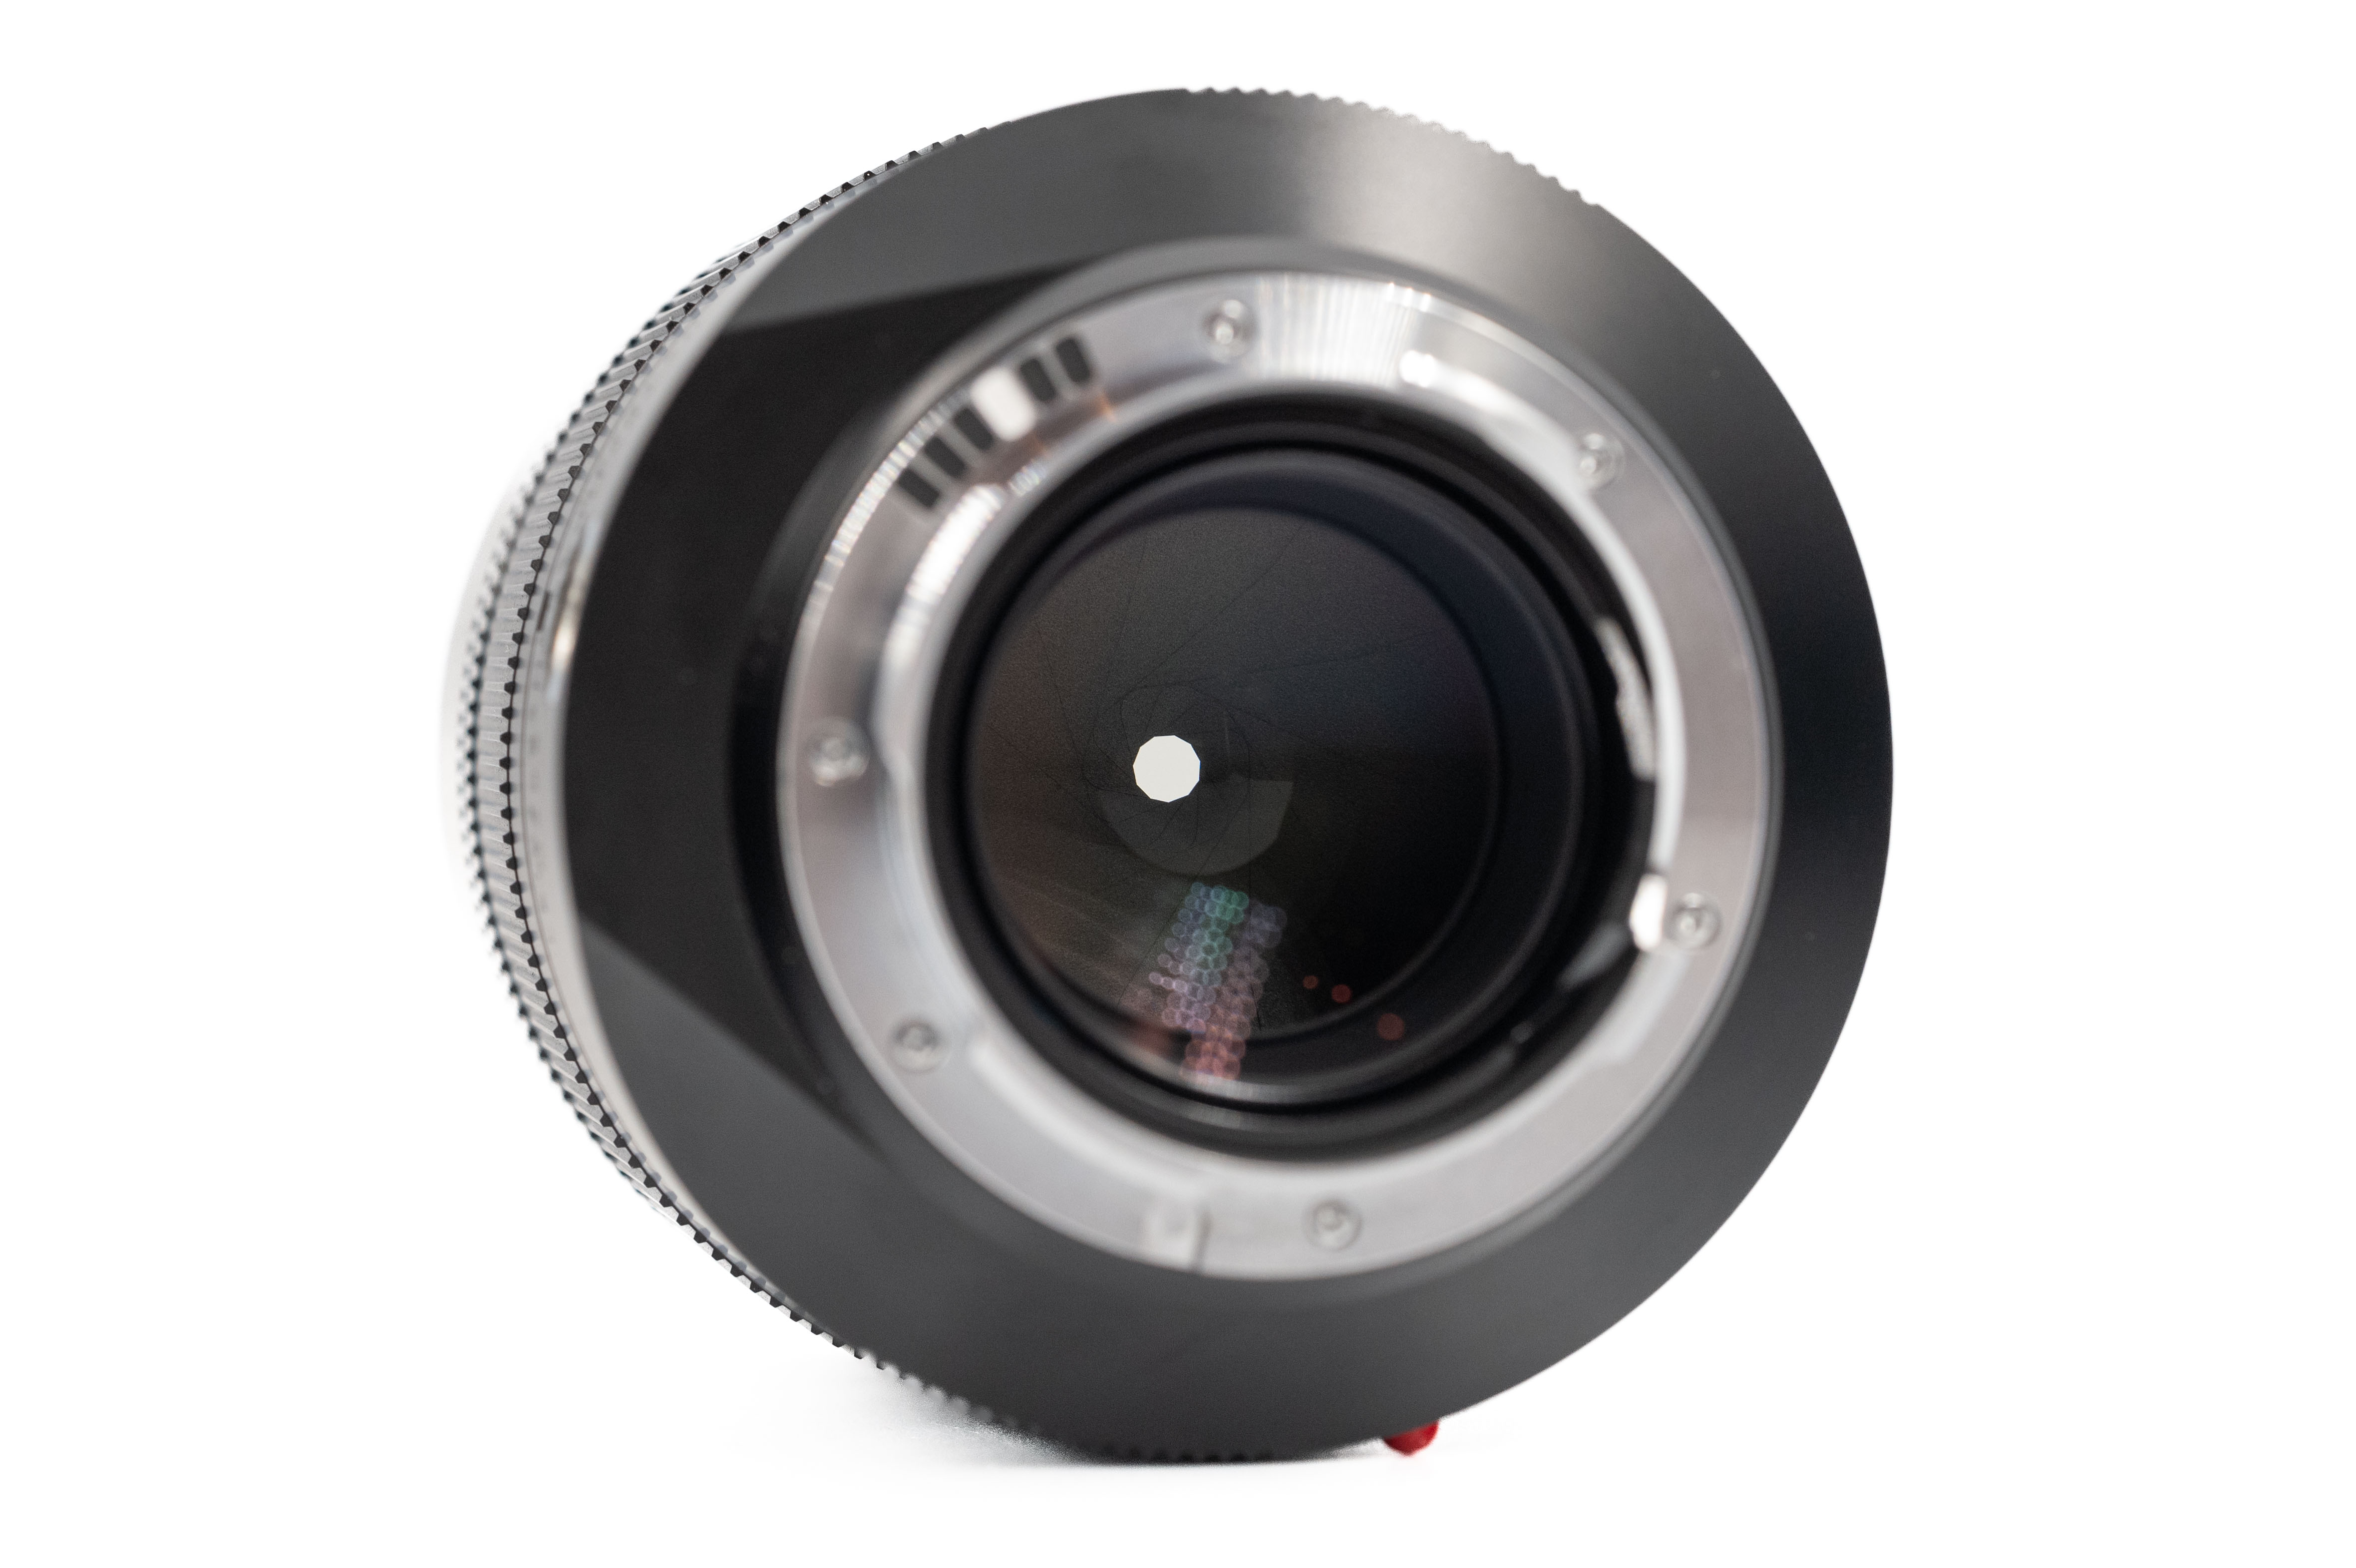 Leica Summilux-M 90mm f/1.5 ASPH 11678